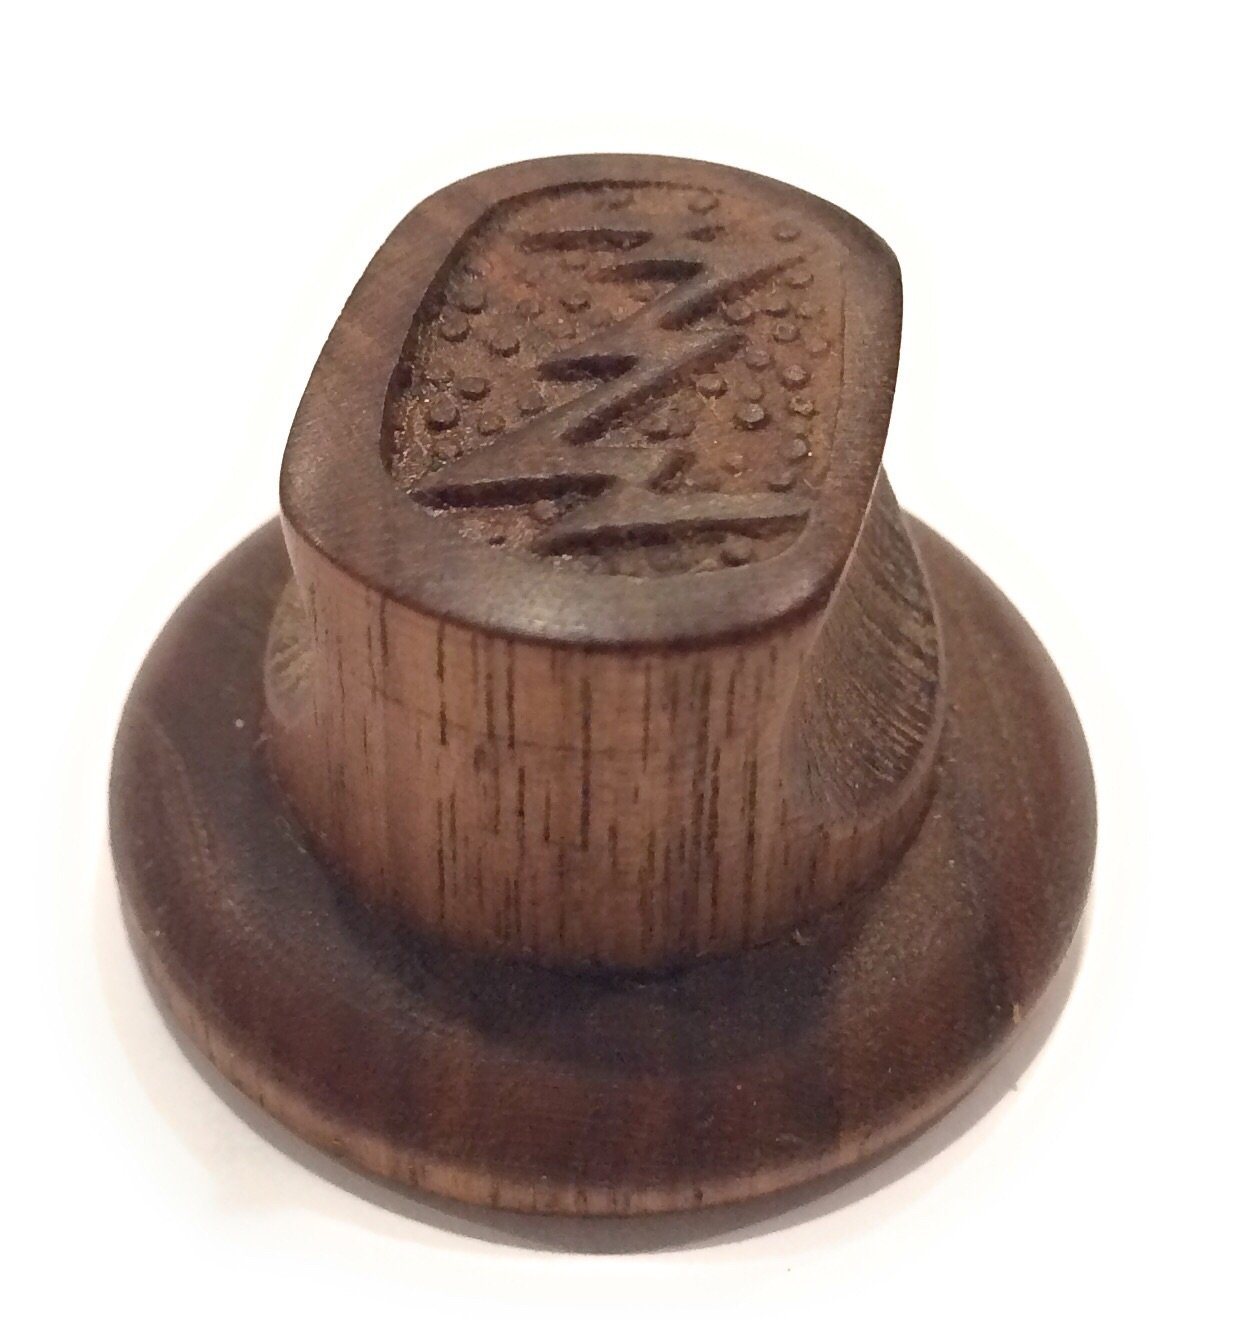 Zenith Small Pinch Solid Wood 1938 Reproduction Radio Knob Knob Big River Hardware 